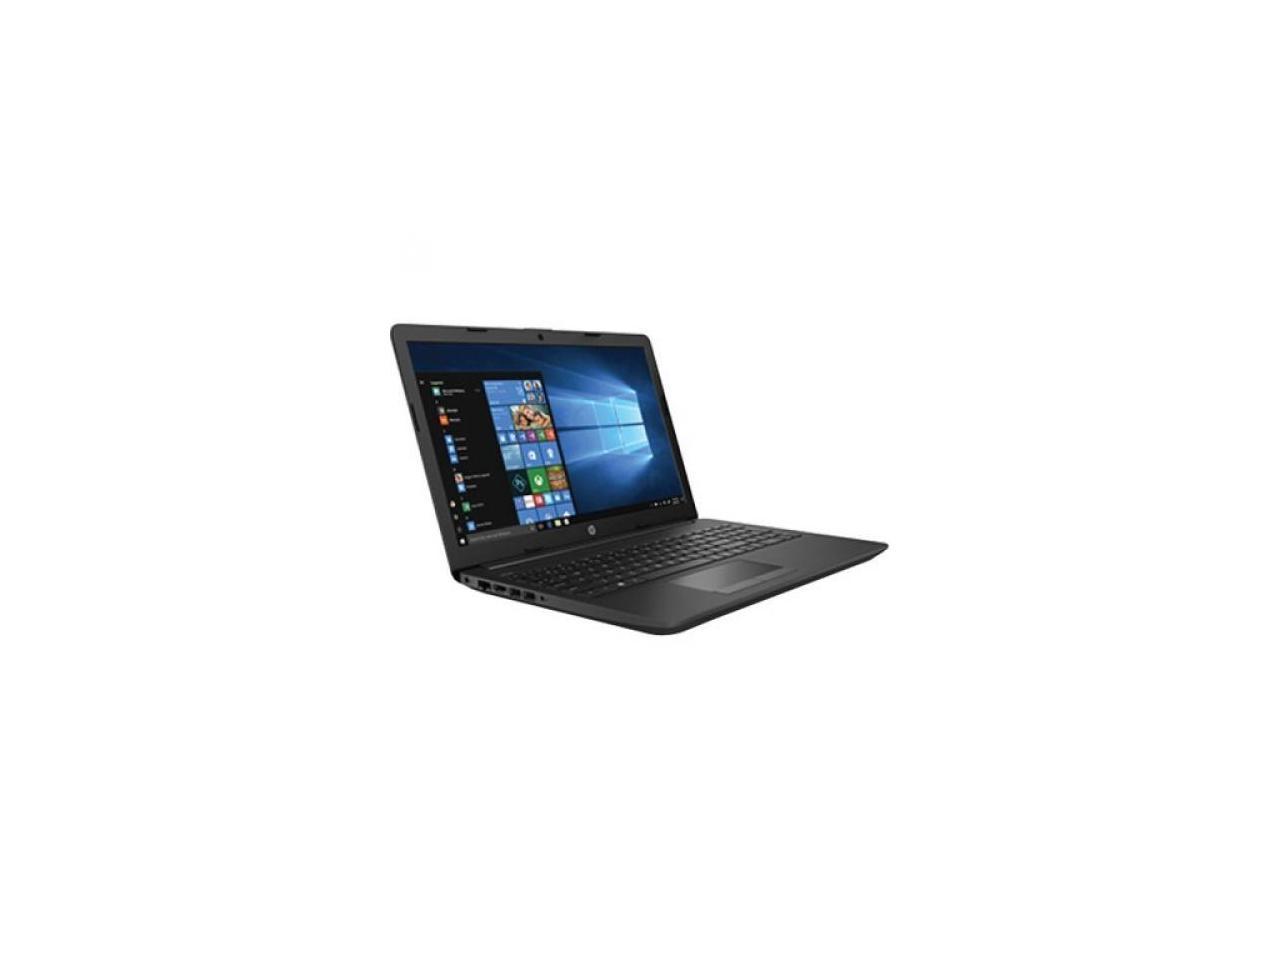 HP Laptop 250 G7 (5YN11UT#ABA) Intel Core i3 7th Gen 7020U (2.30 GHz) 4 GB Memory 500 GB HDD Intel HD Graphics 620 15.6" Windows 10 Home 64-bit